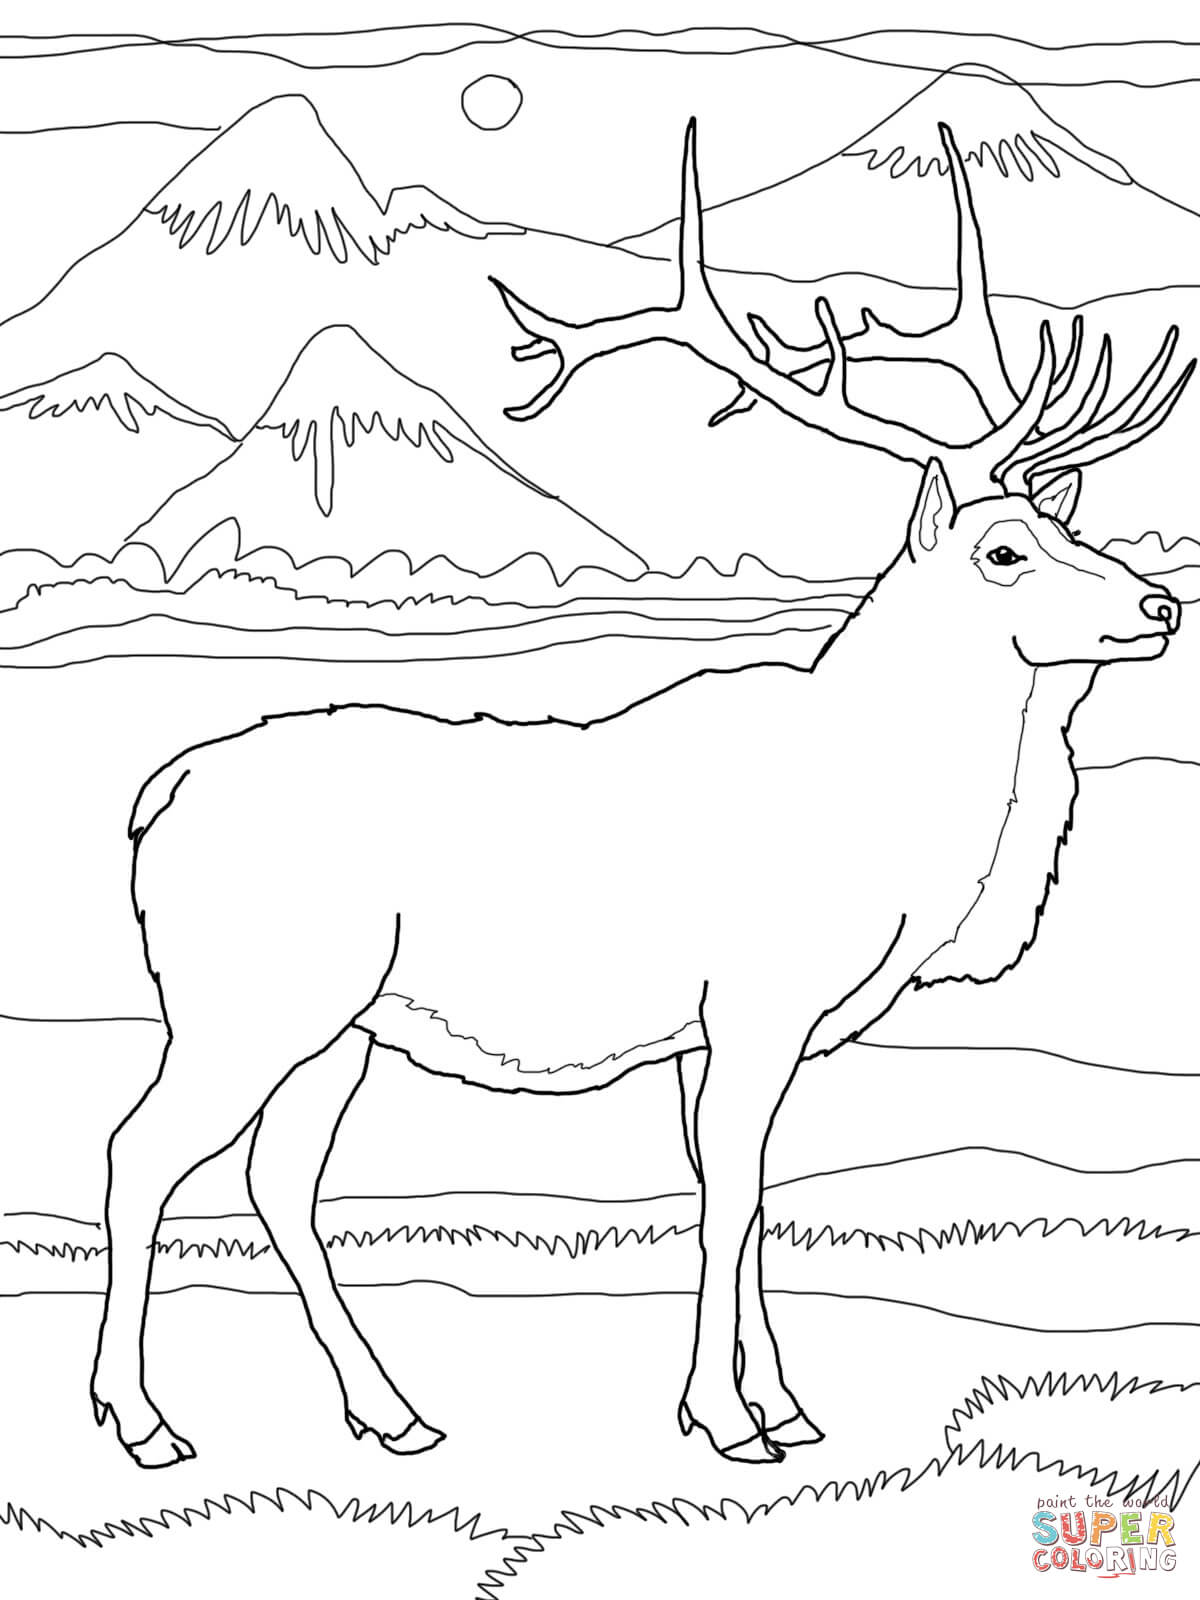 elk coloring wapiti mountain rocky deer printable bull super colouring supercoloring drawing drawings adult animal sheets easy draw cartoons popular